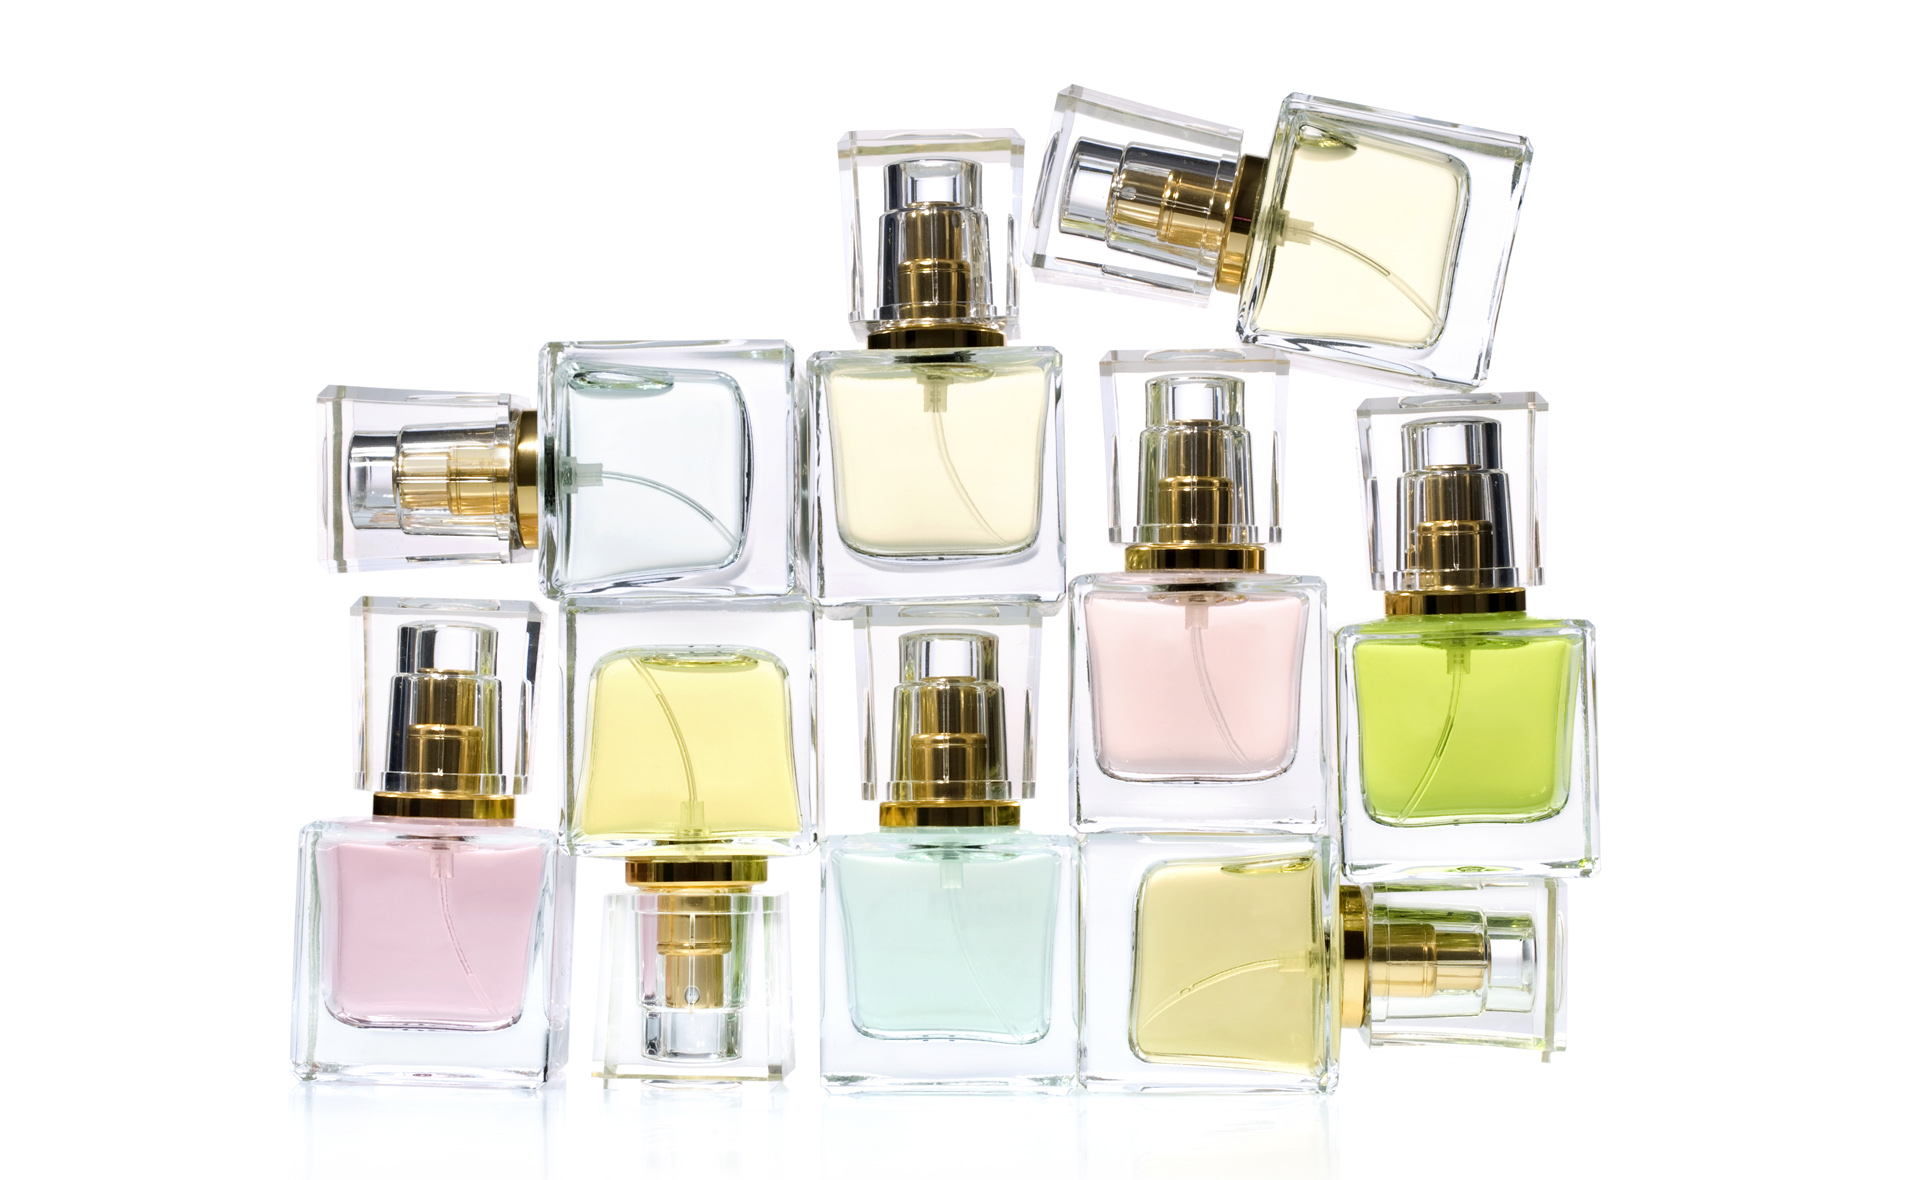 Perfume in bottles over white background